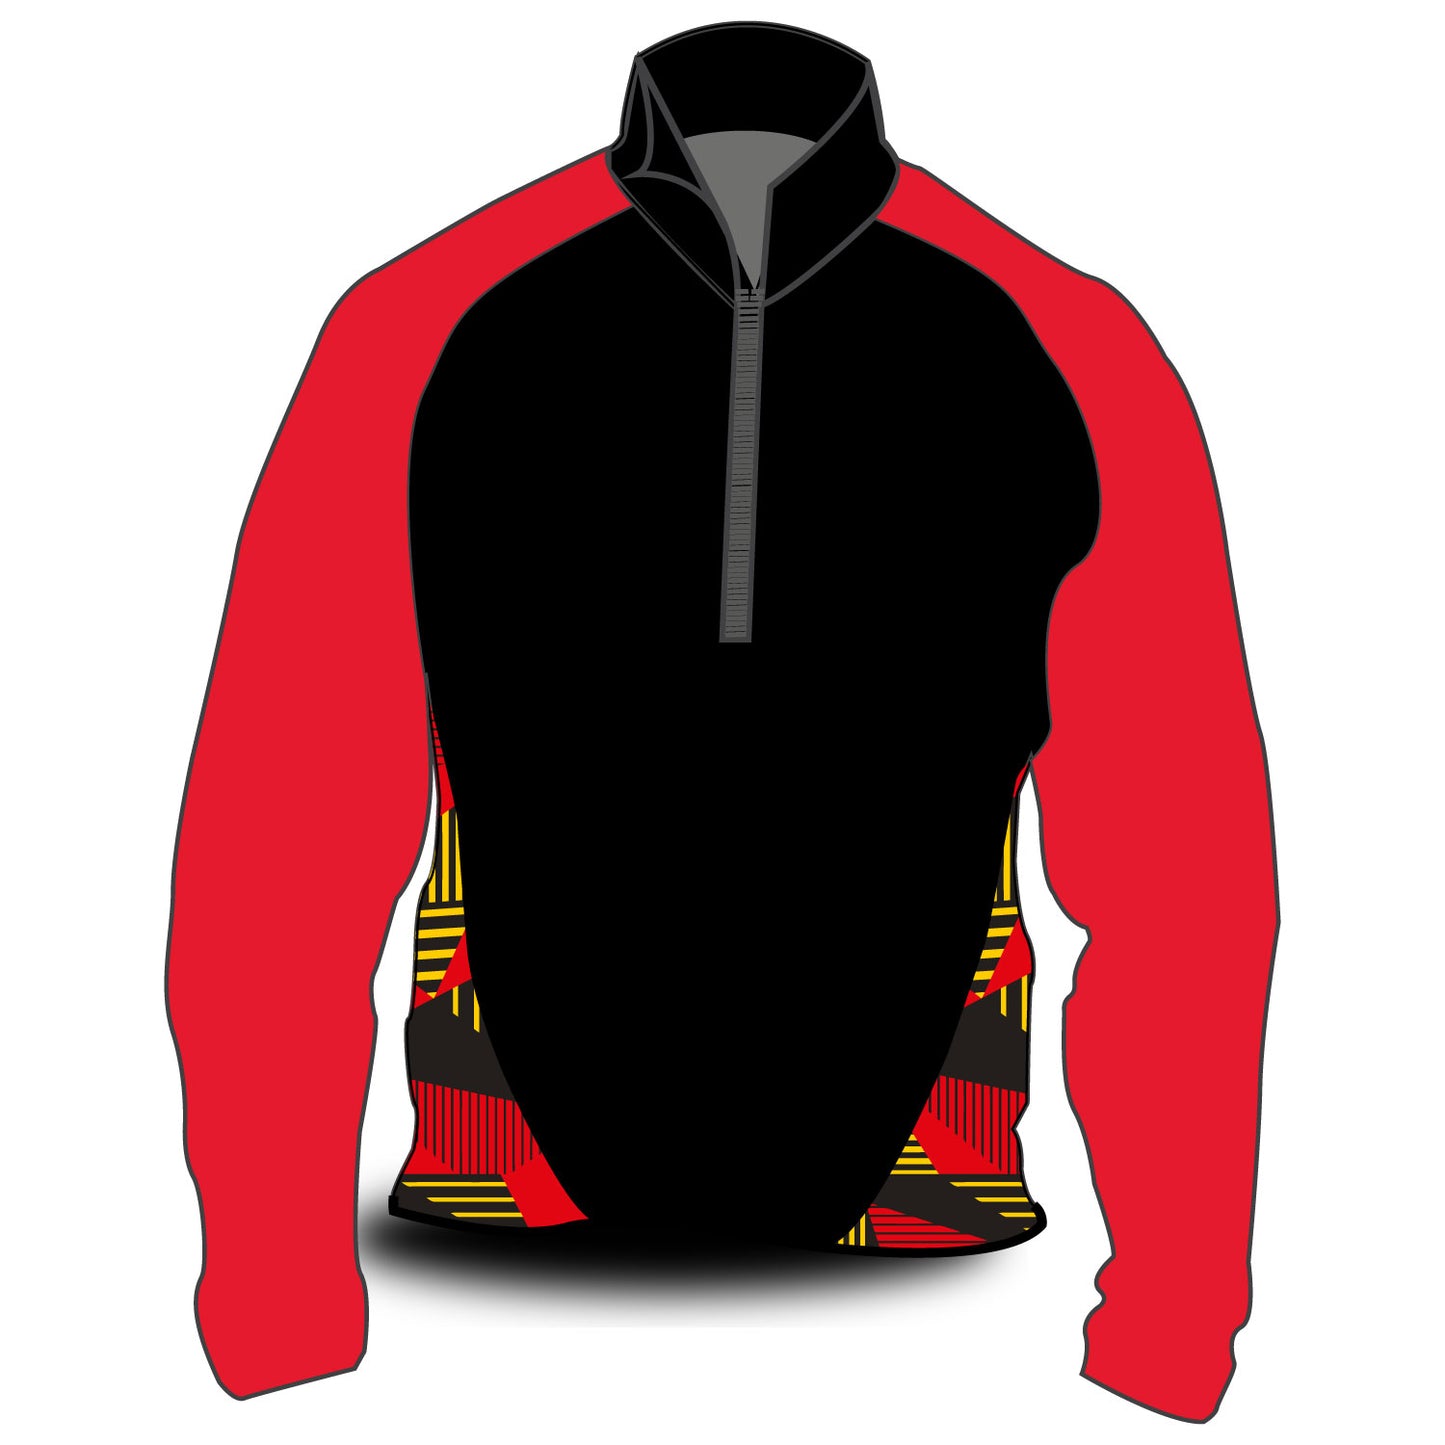 Glasgow Rowing Club Hardshell Splash Jacket Black & Red